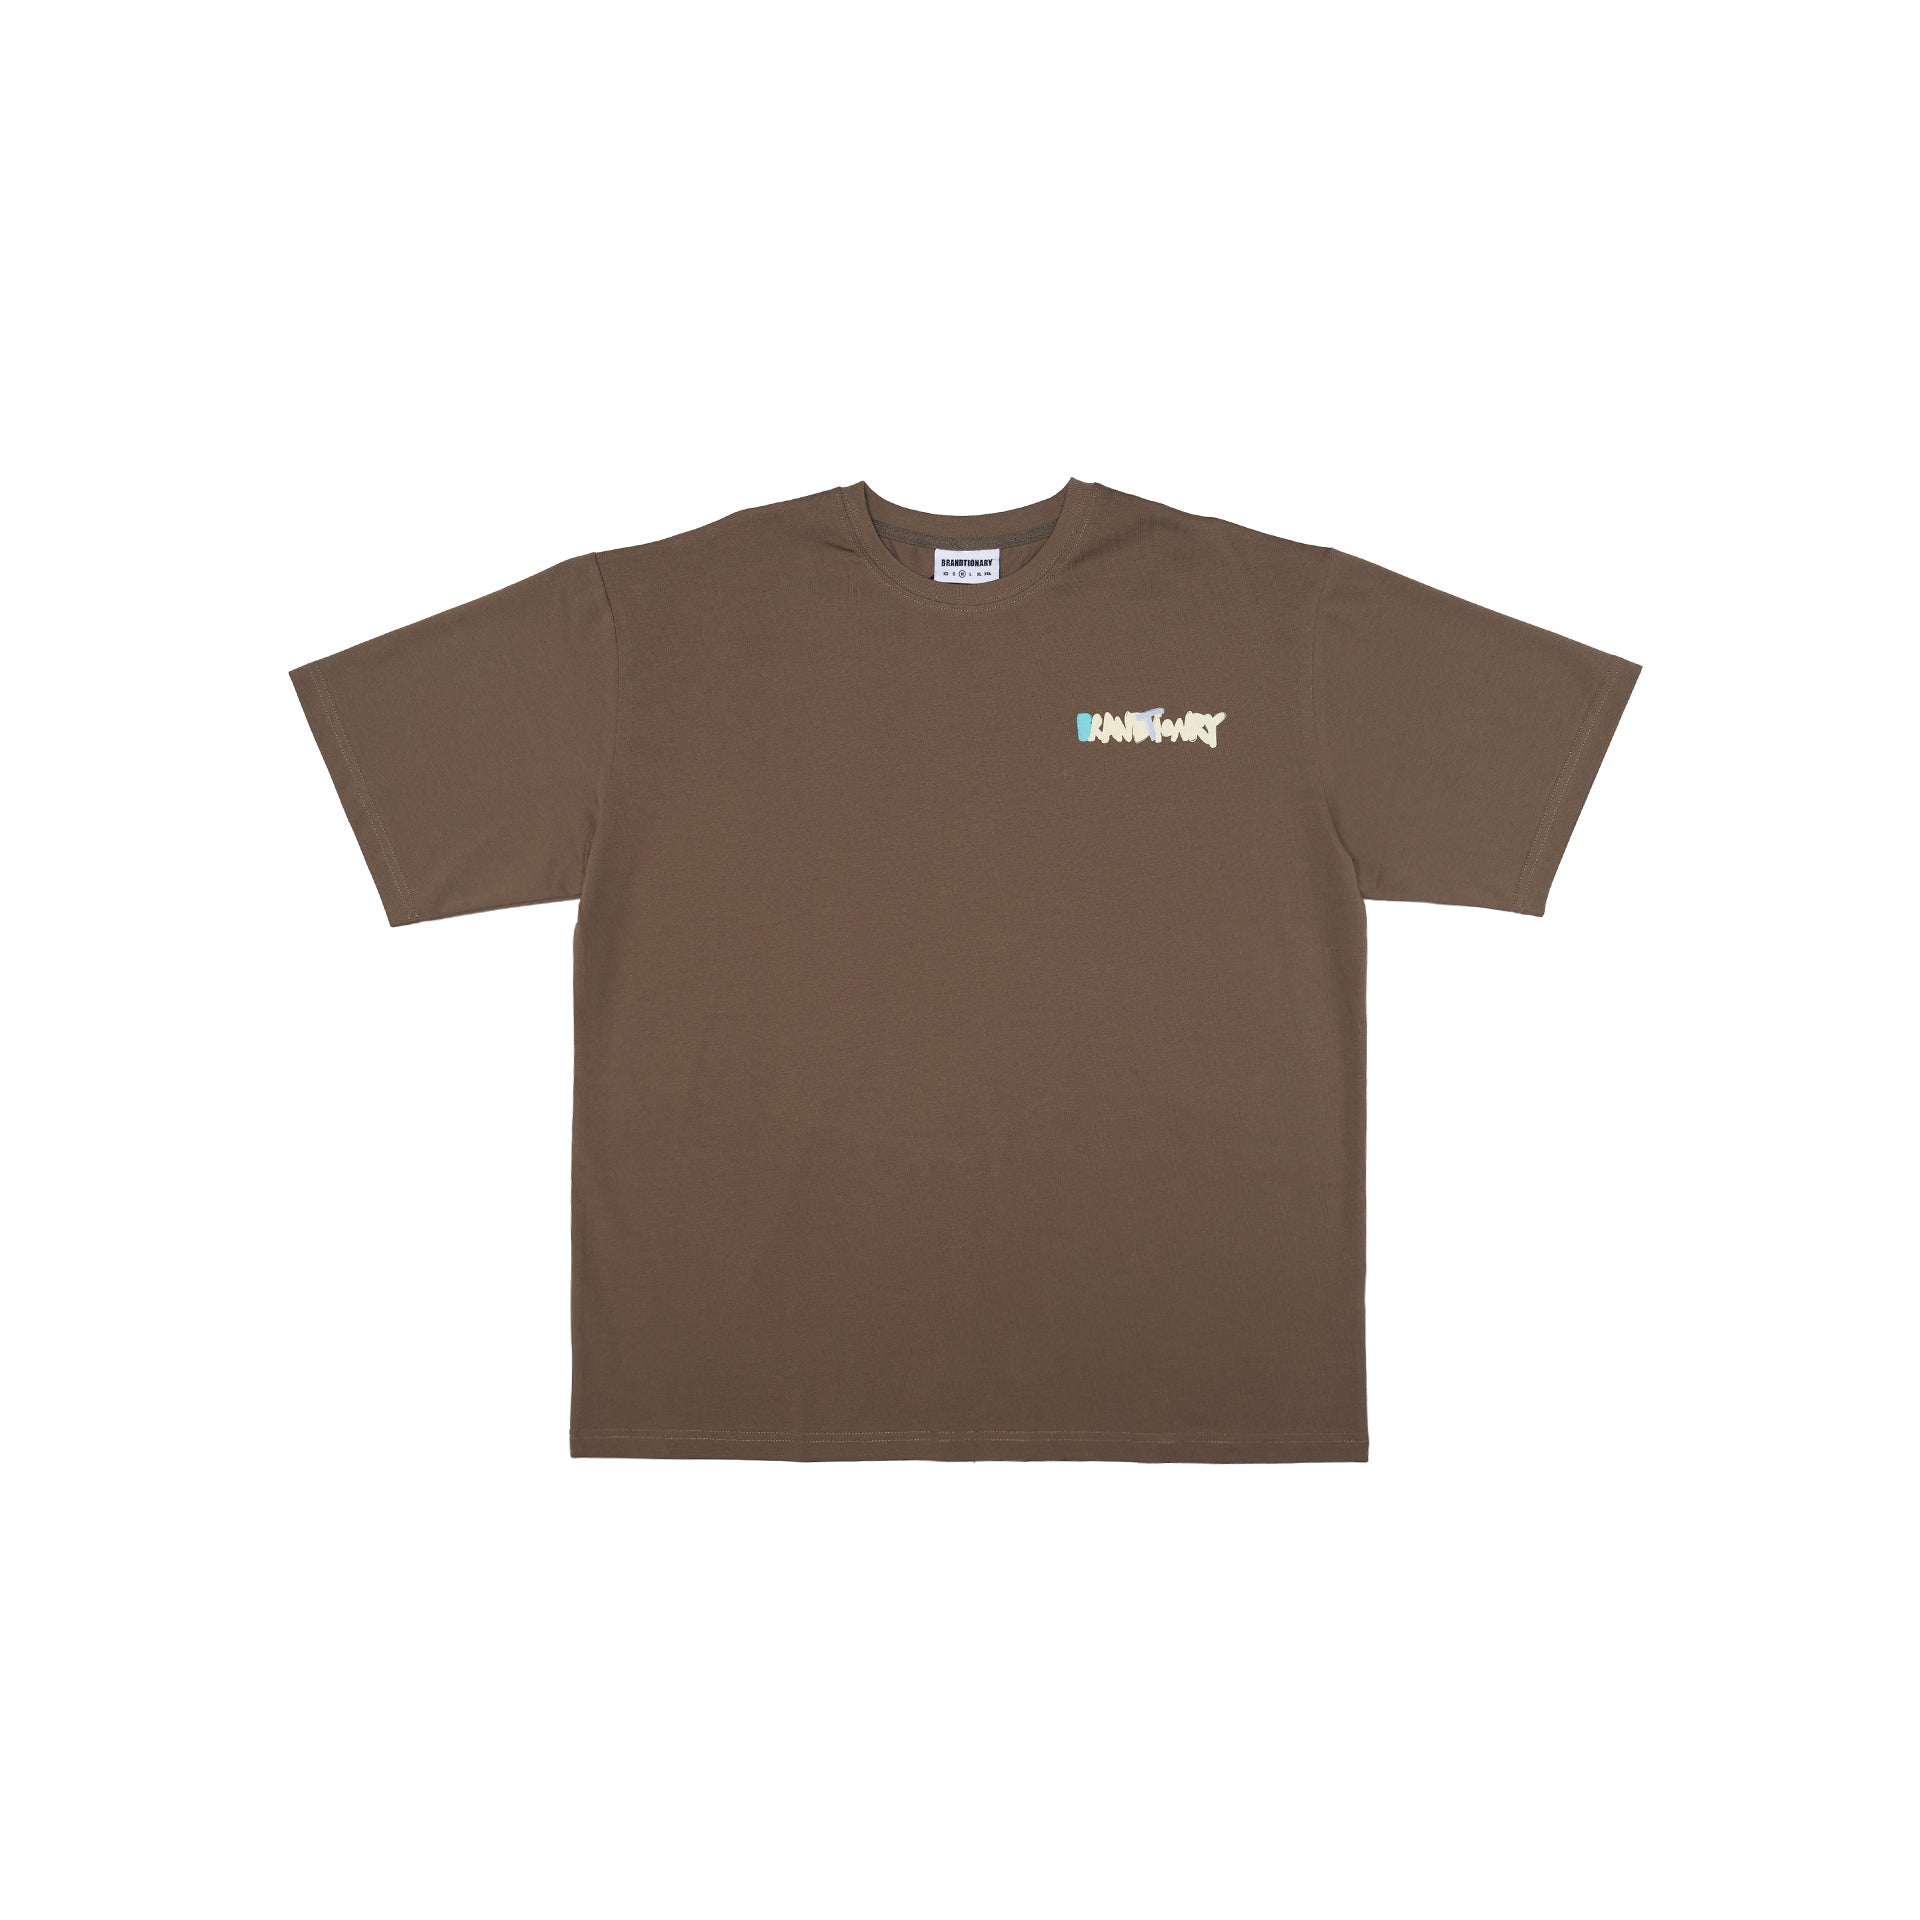 Brown T-shirt "BRANDTIONARY" by Brandtionary